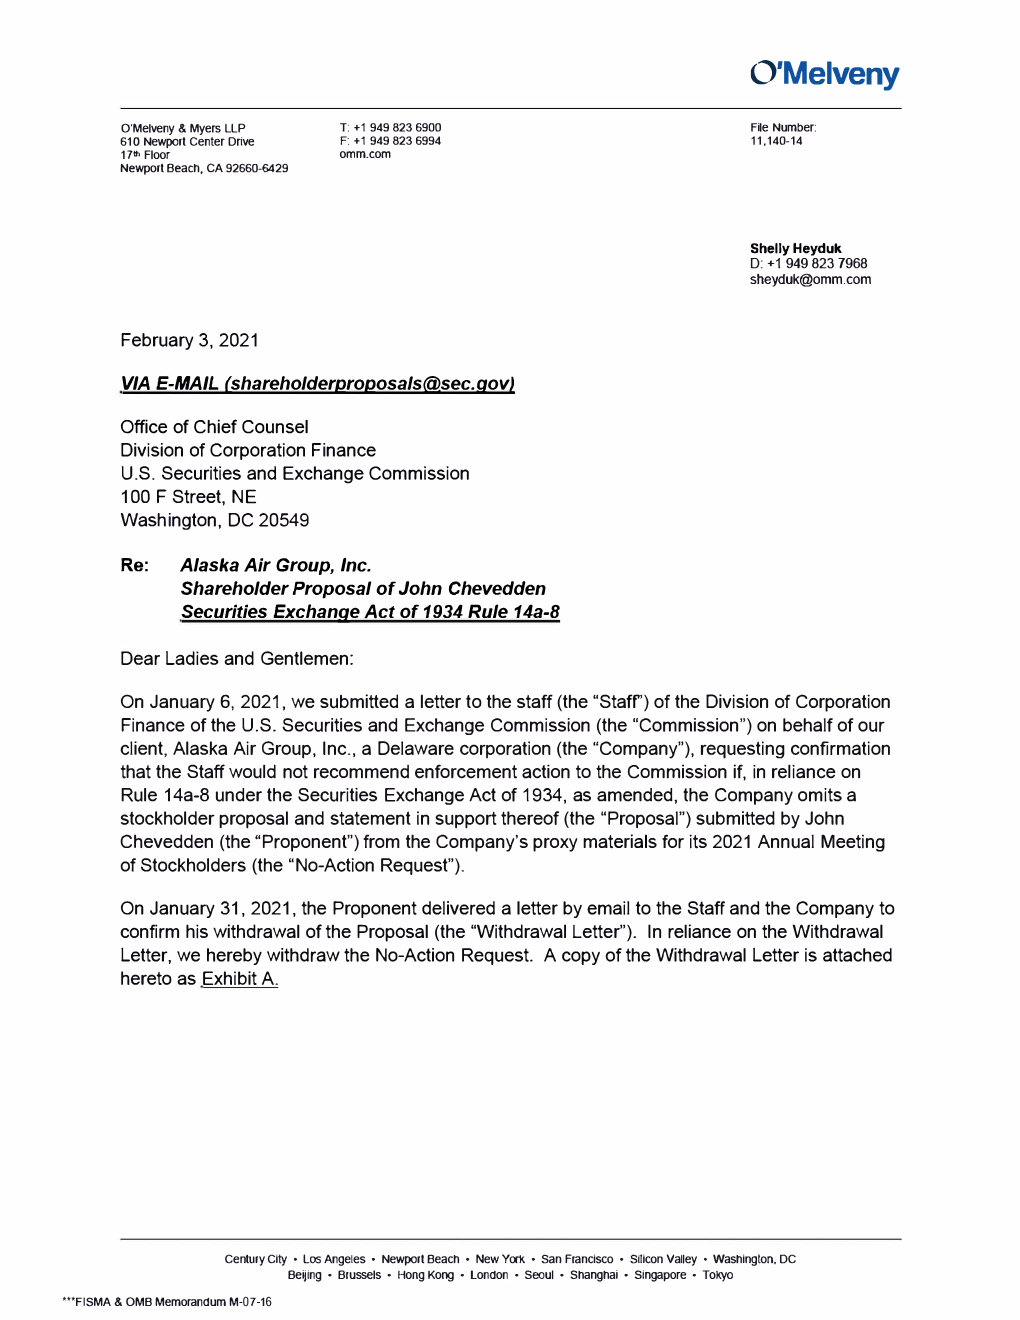 Alaska Air Group, Inc. Shareholder Proposal of John Chevedden Securities Exchange Act of 1934 Rule 14A-8